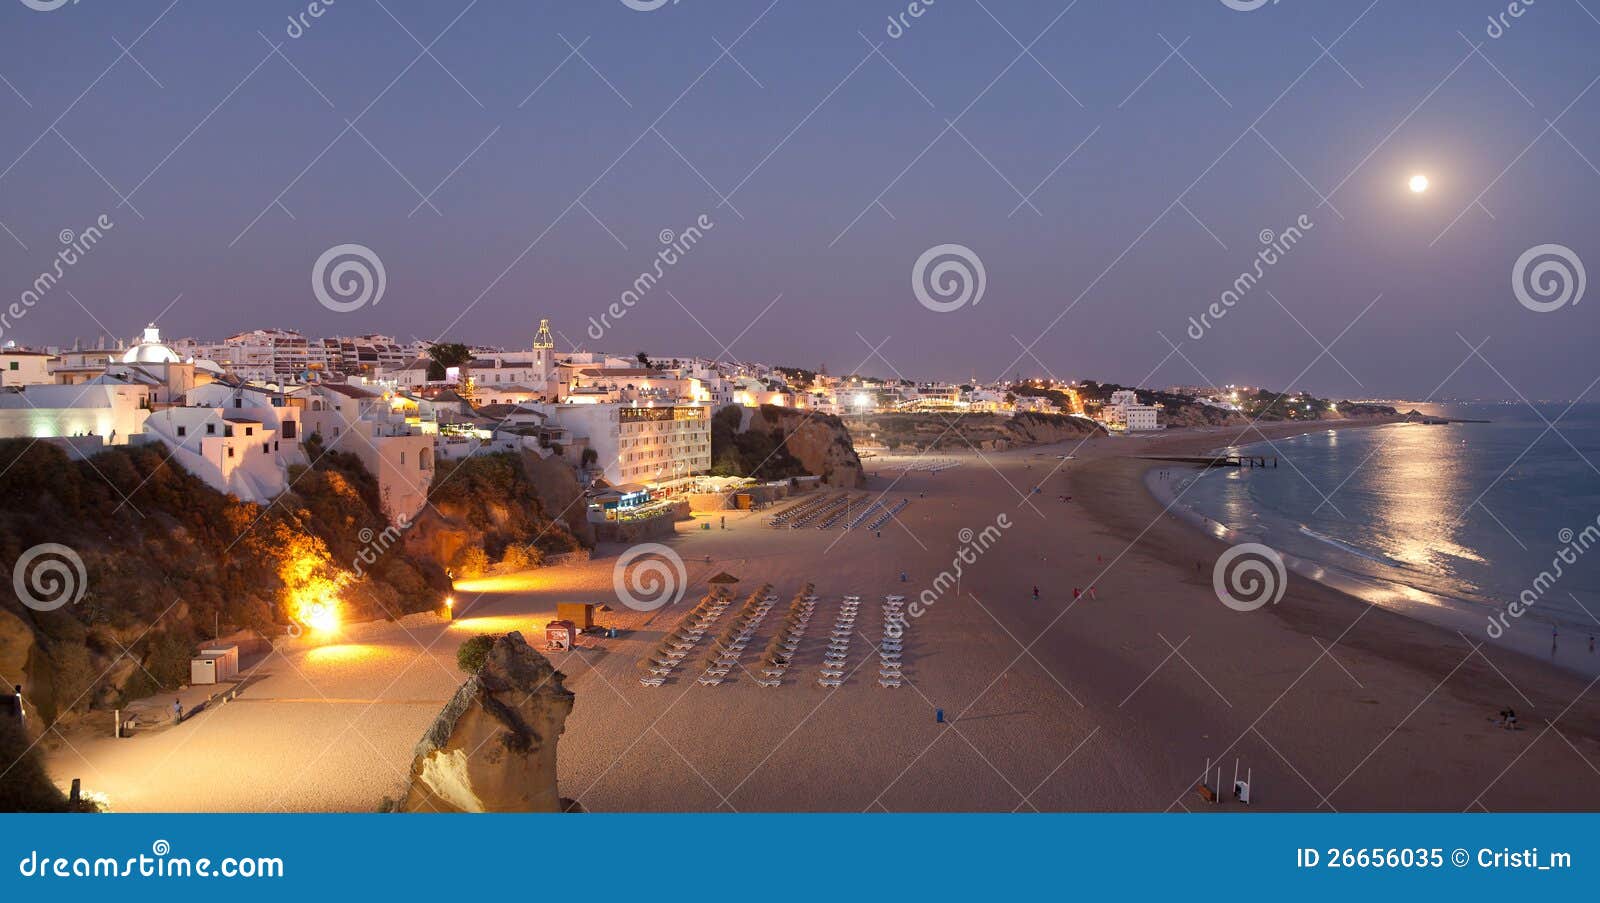 albufeira at night. atlantic coast in portugal